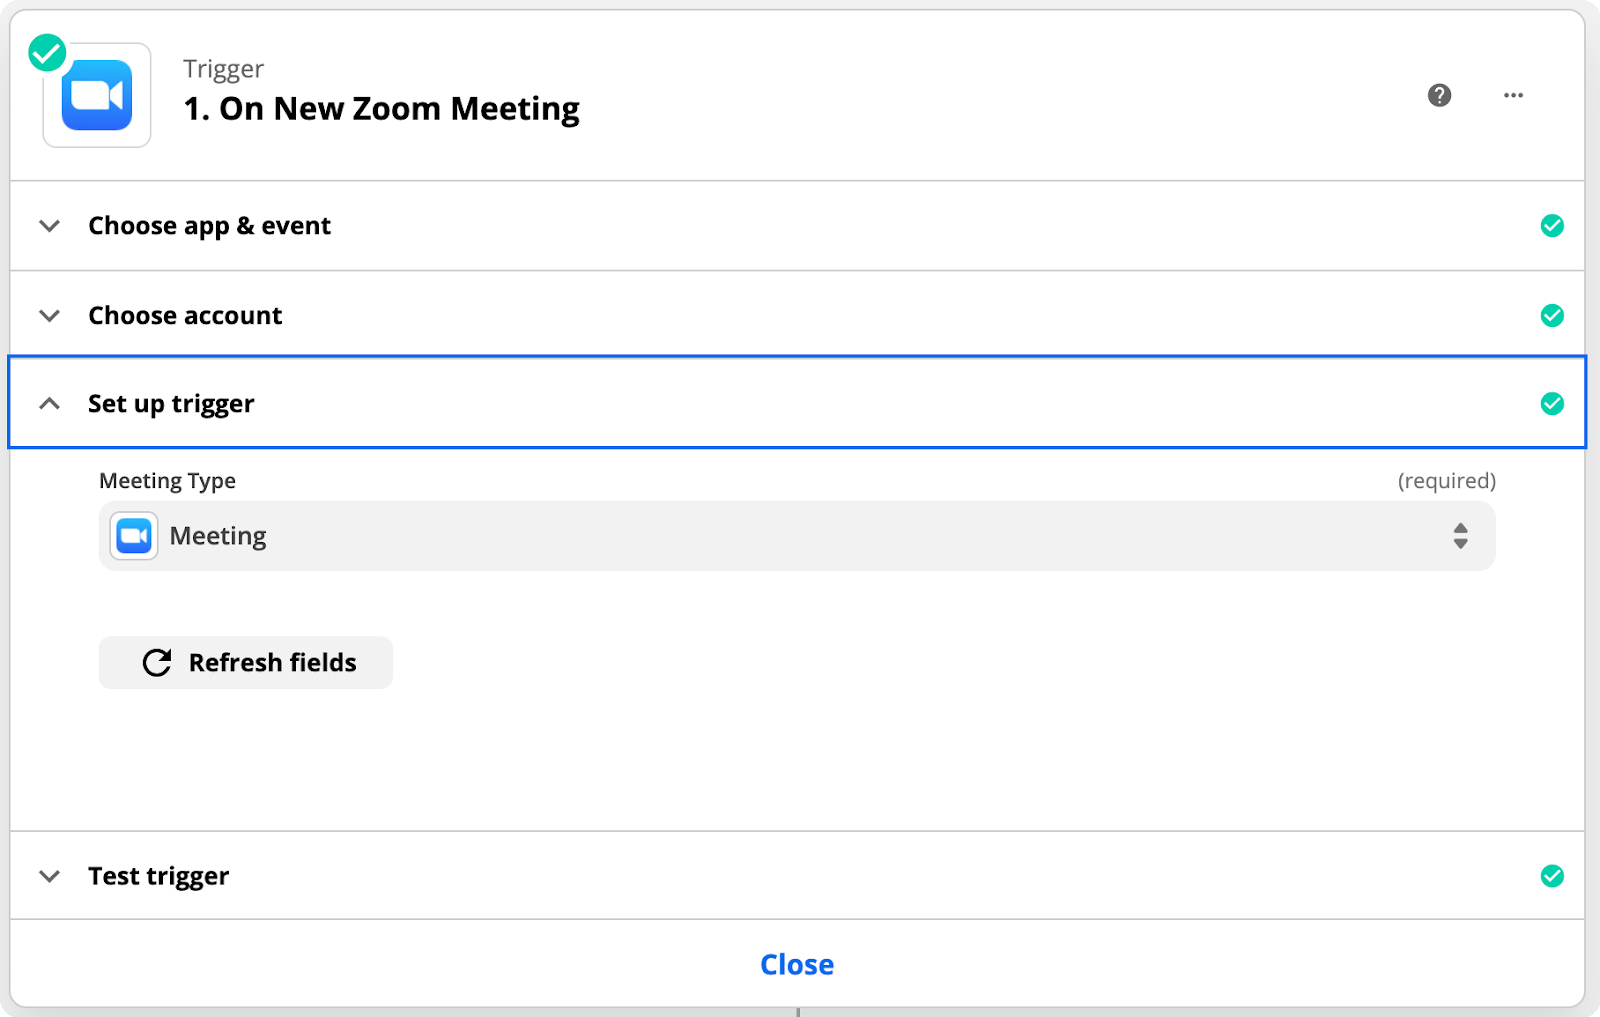 Zoom meeting type